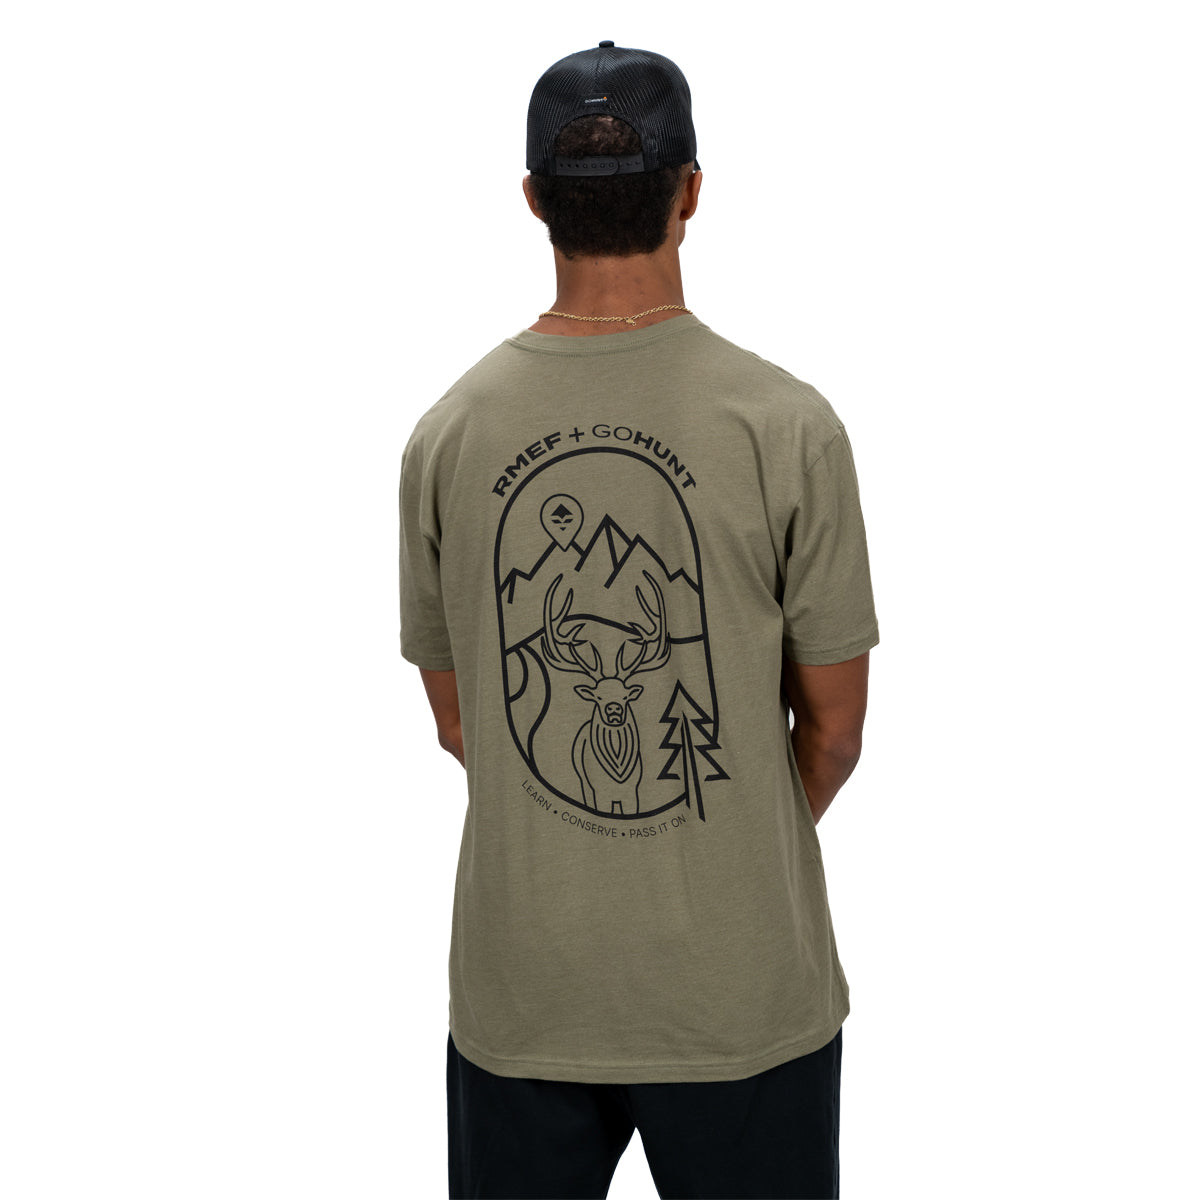 GOHUNT RMEF Bull T-shirt in Light Olive by GOHUNT | GOHUNT - GOHUNT Shop